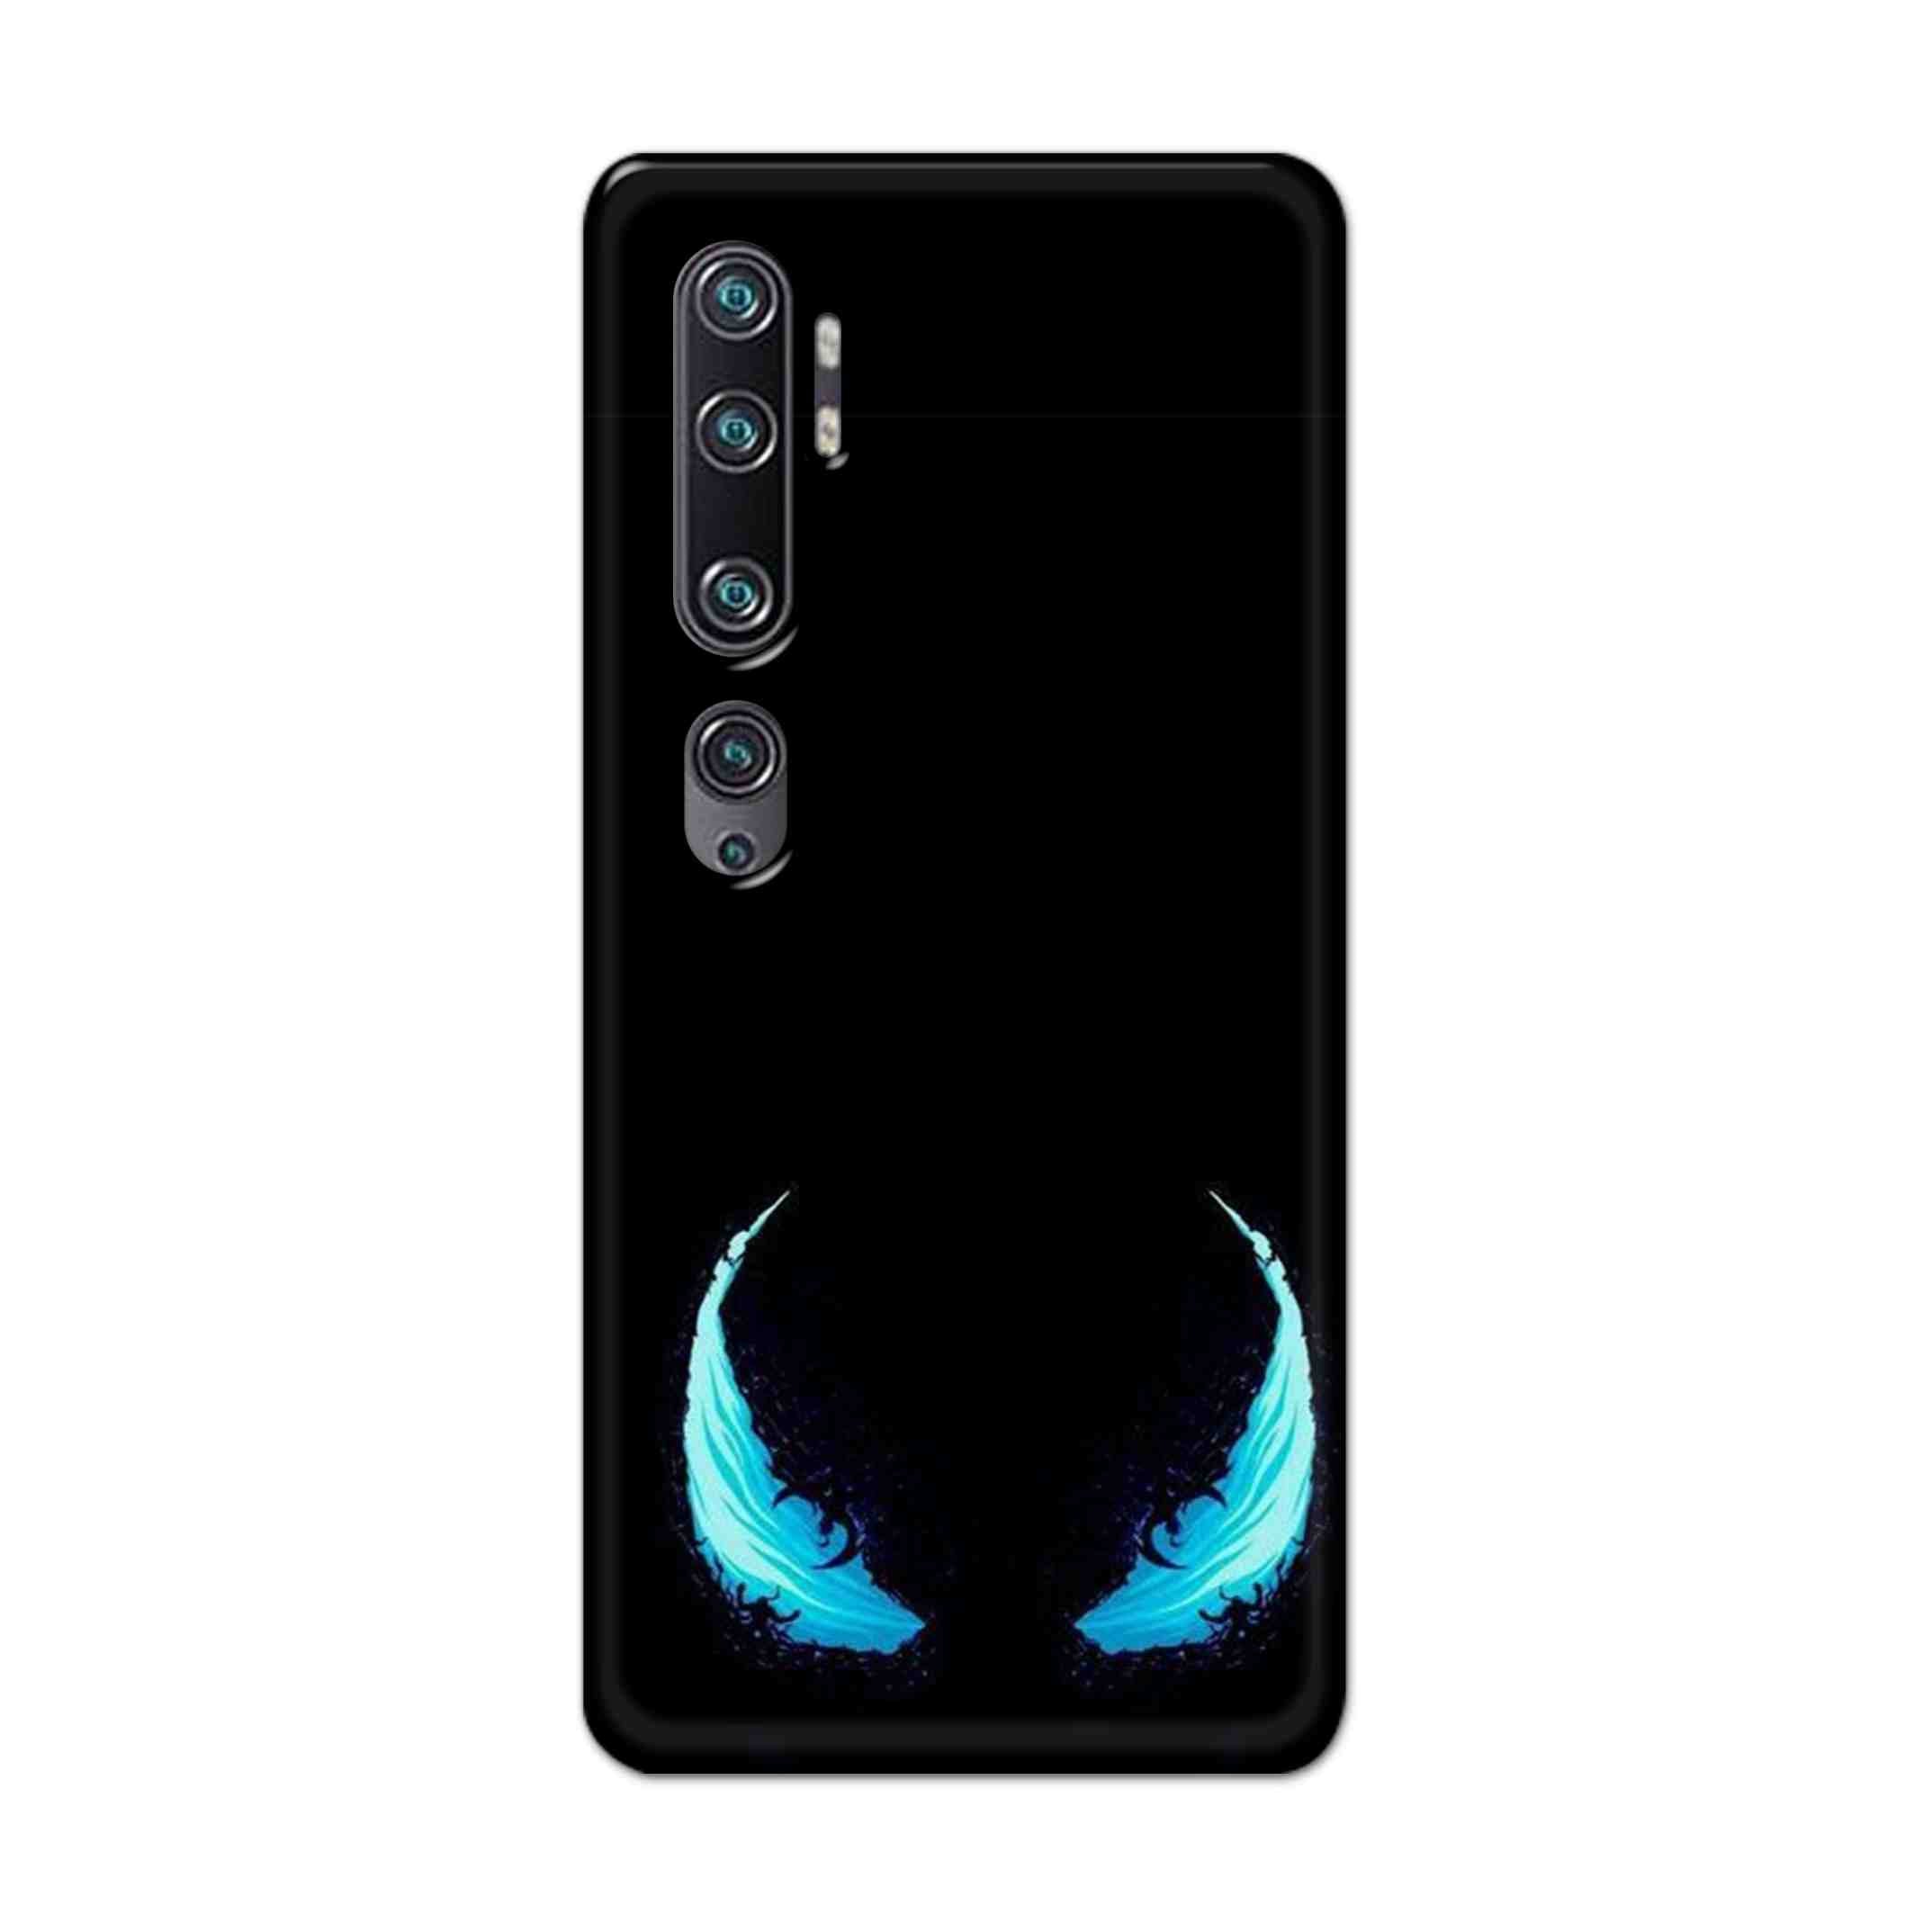 Buy Venom Eyes Hard Back Mobile Phone Case Cover For Xiaomi Mi Note 10 Online